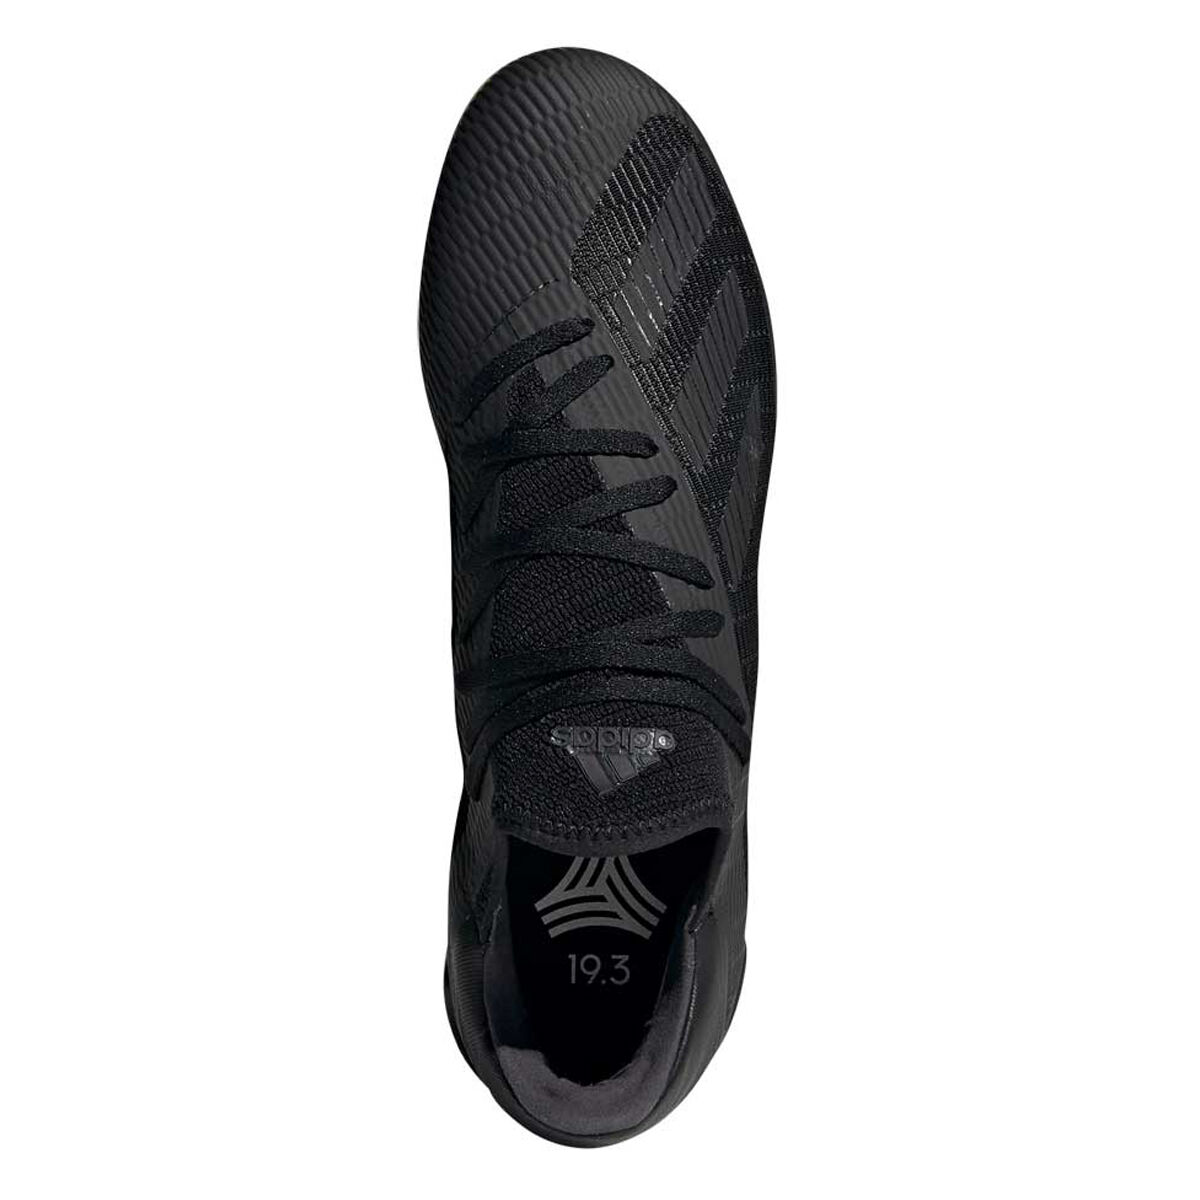 adidas futsal shoes australia